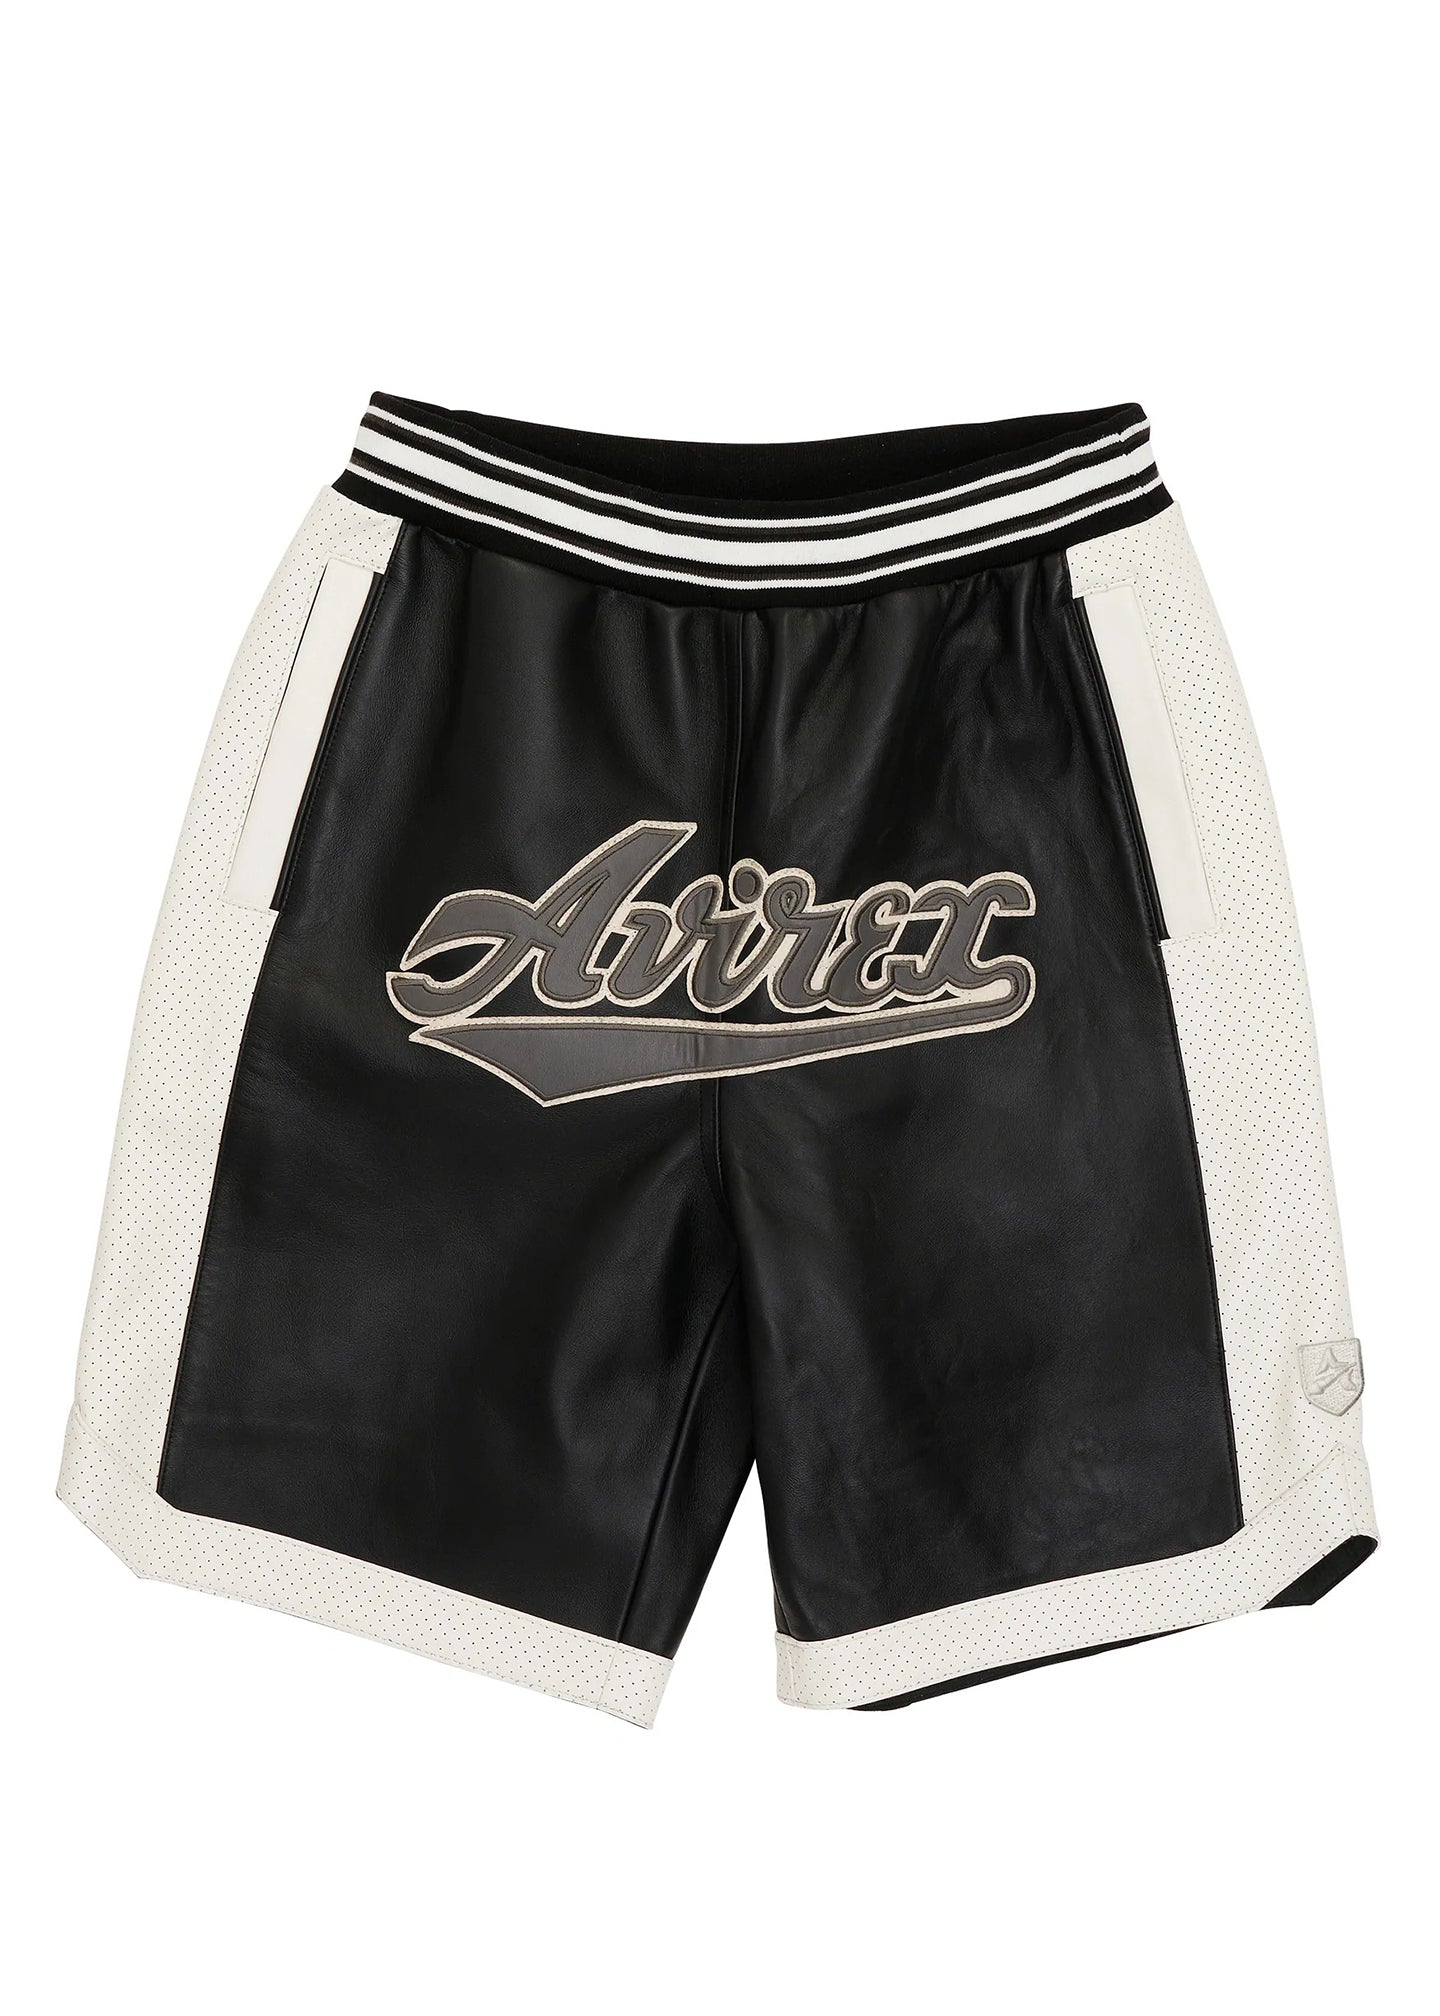 Avirex varsity shorts in black and white leather